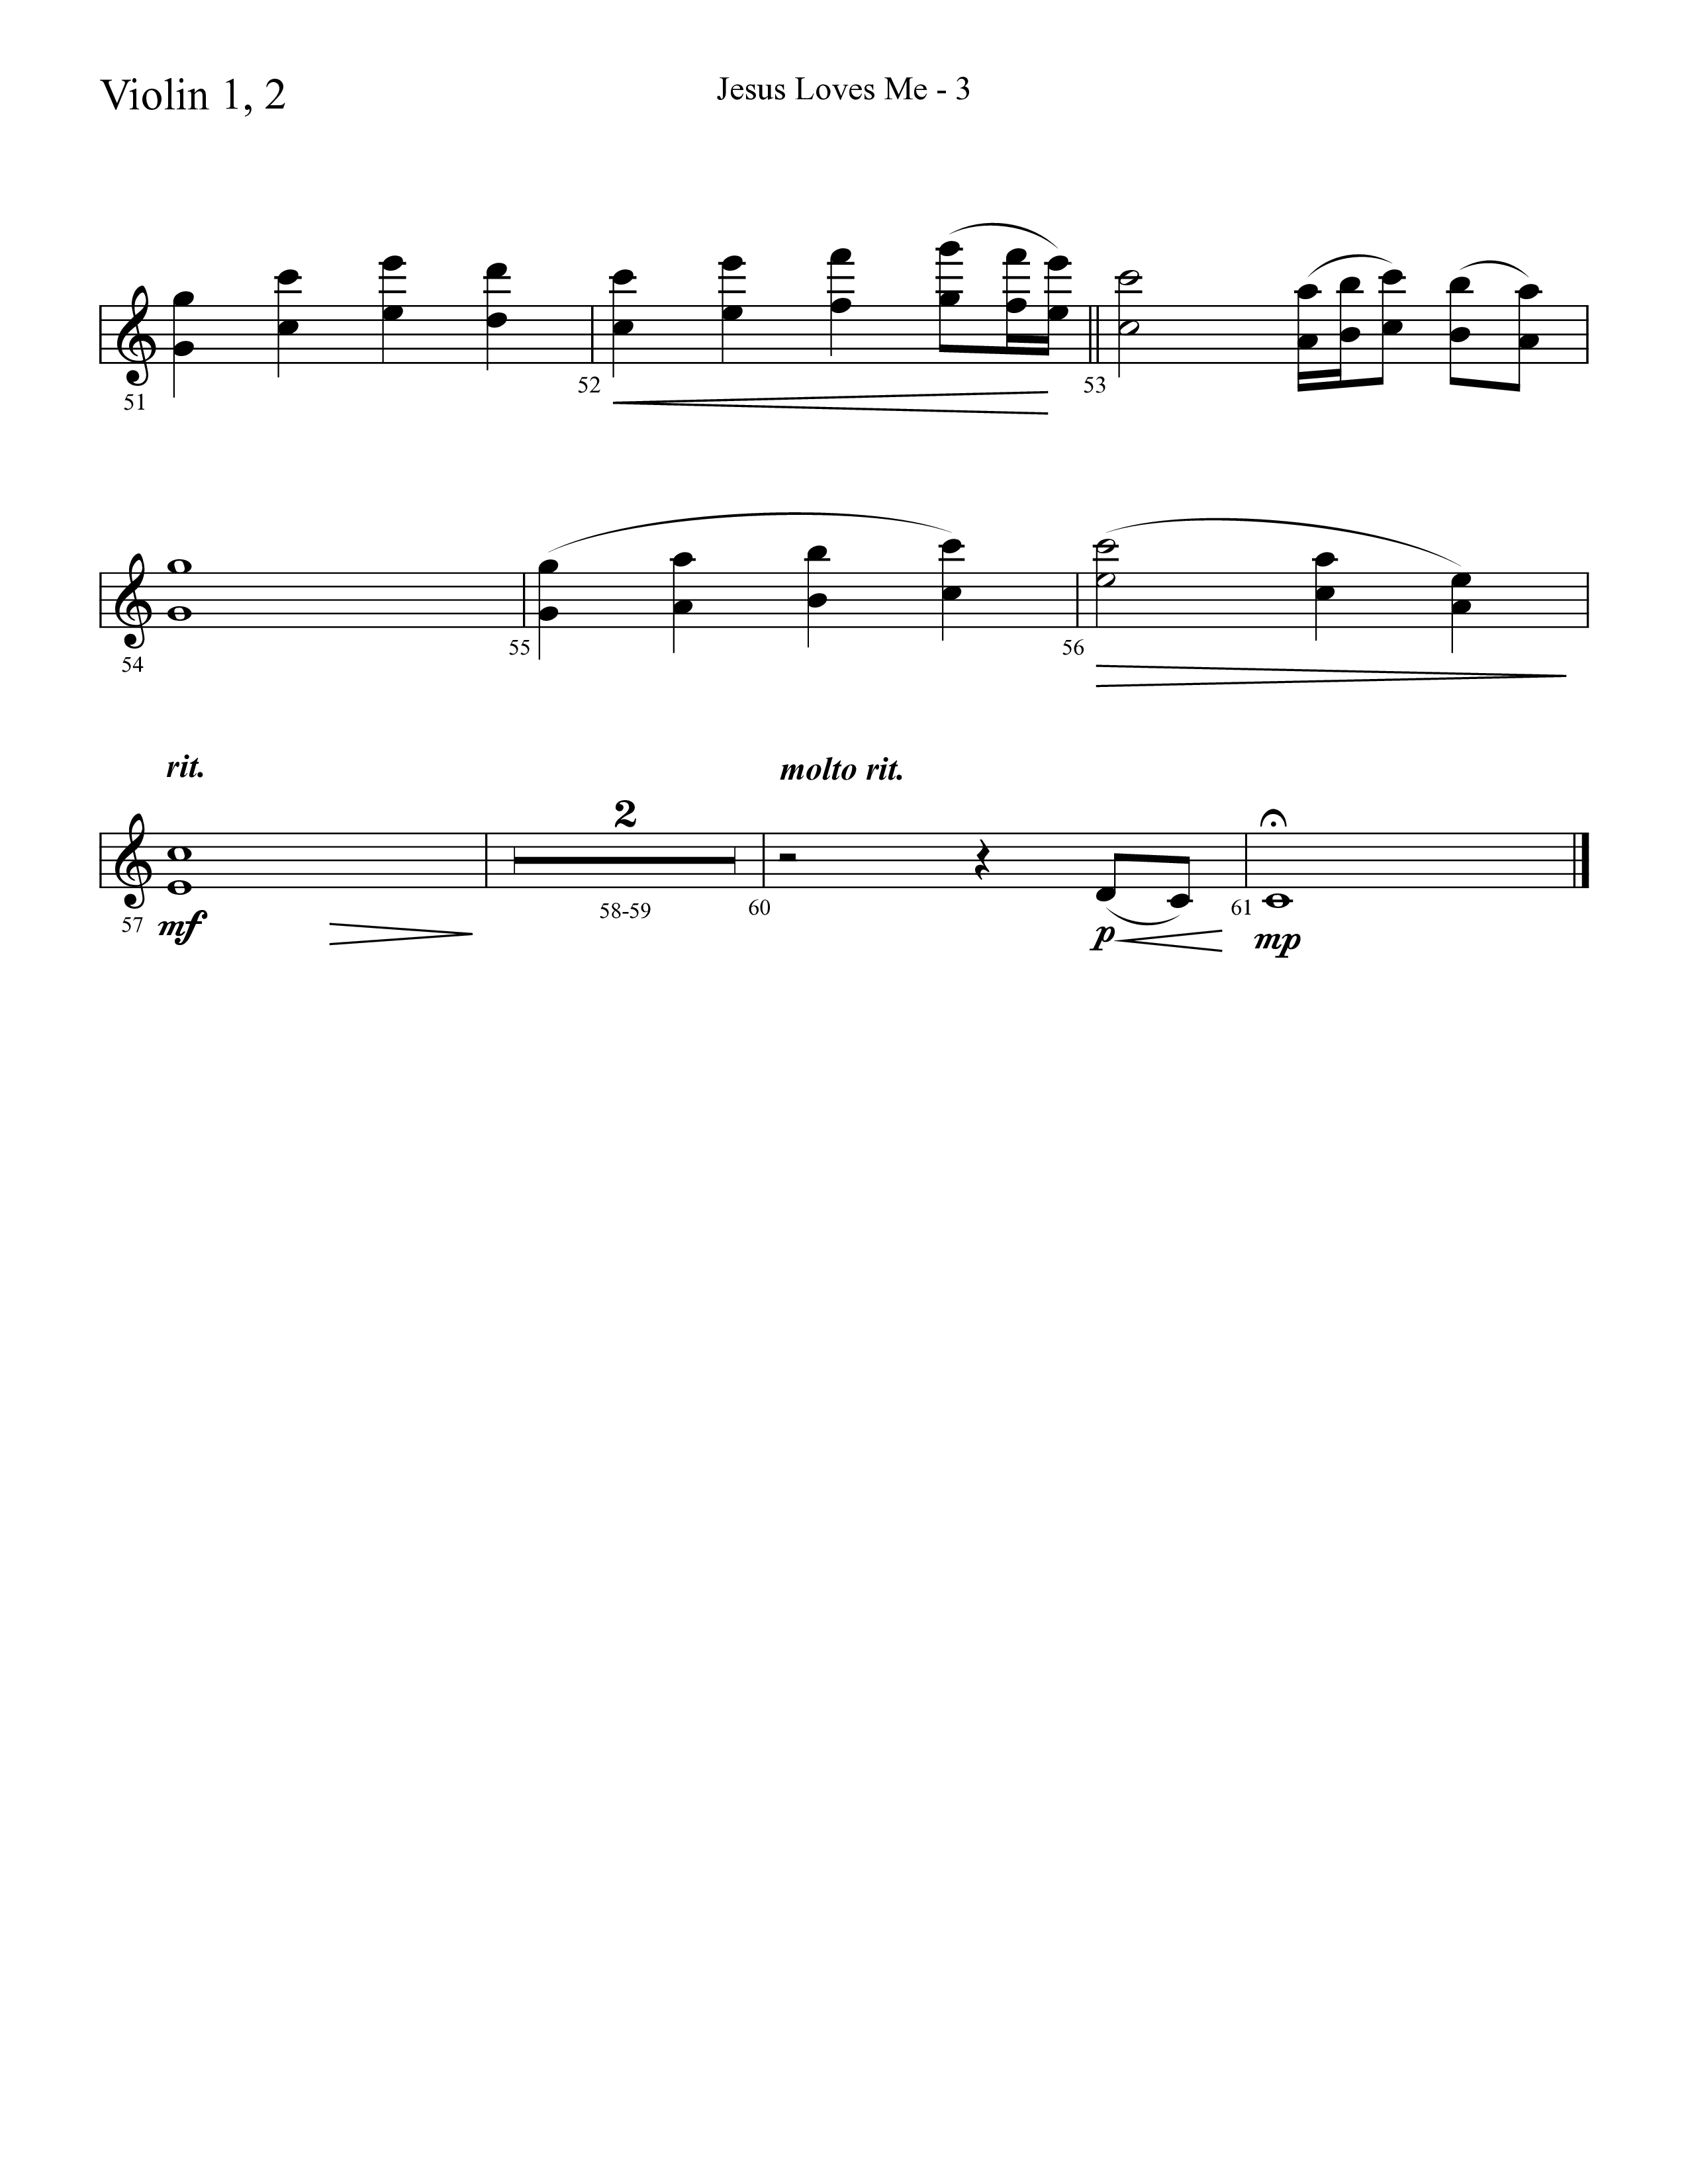 Jesus Loves Me with The Love Of God (Choral Anthem SATB) Violin 1/2 (Lifeway Choral / Arr. Cliff Duren)